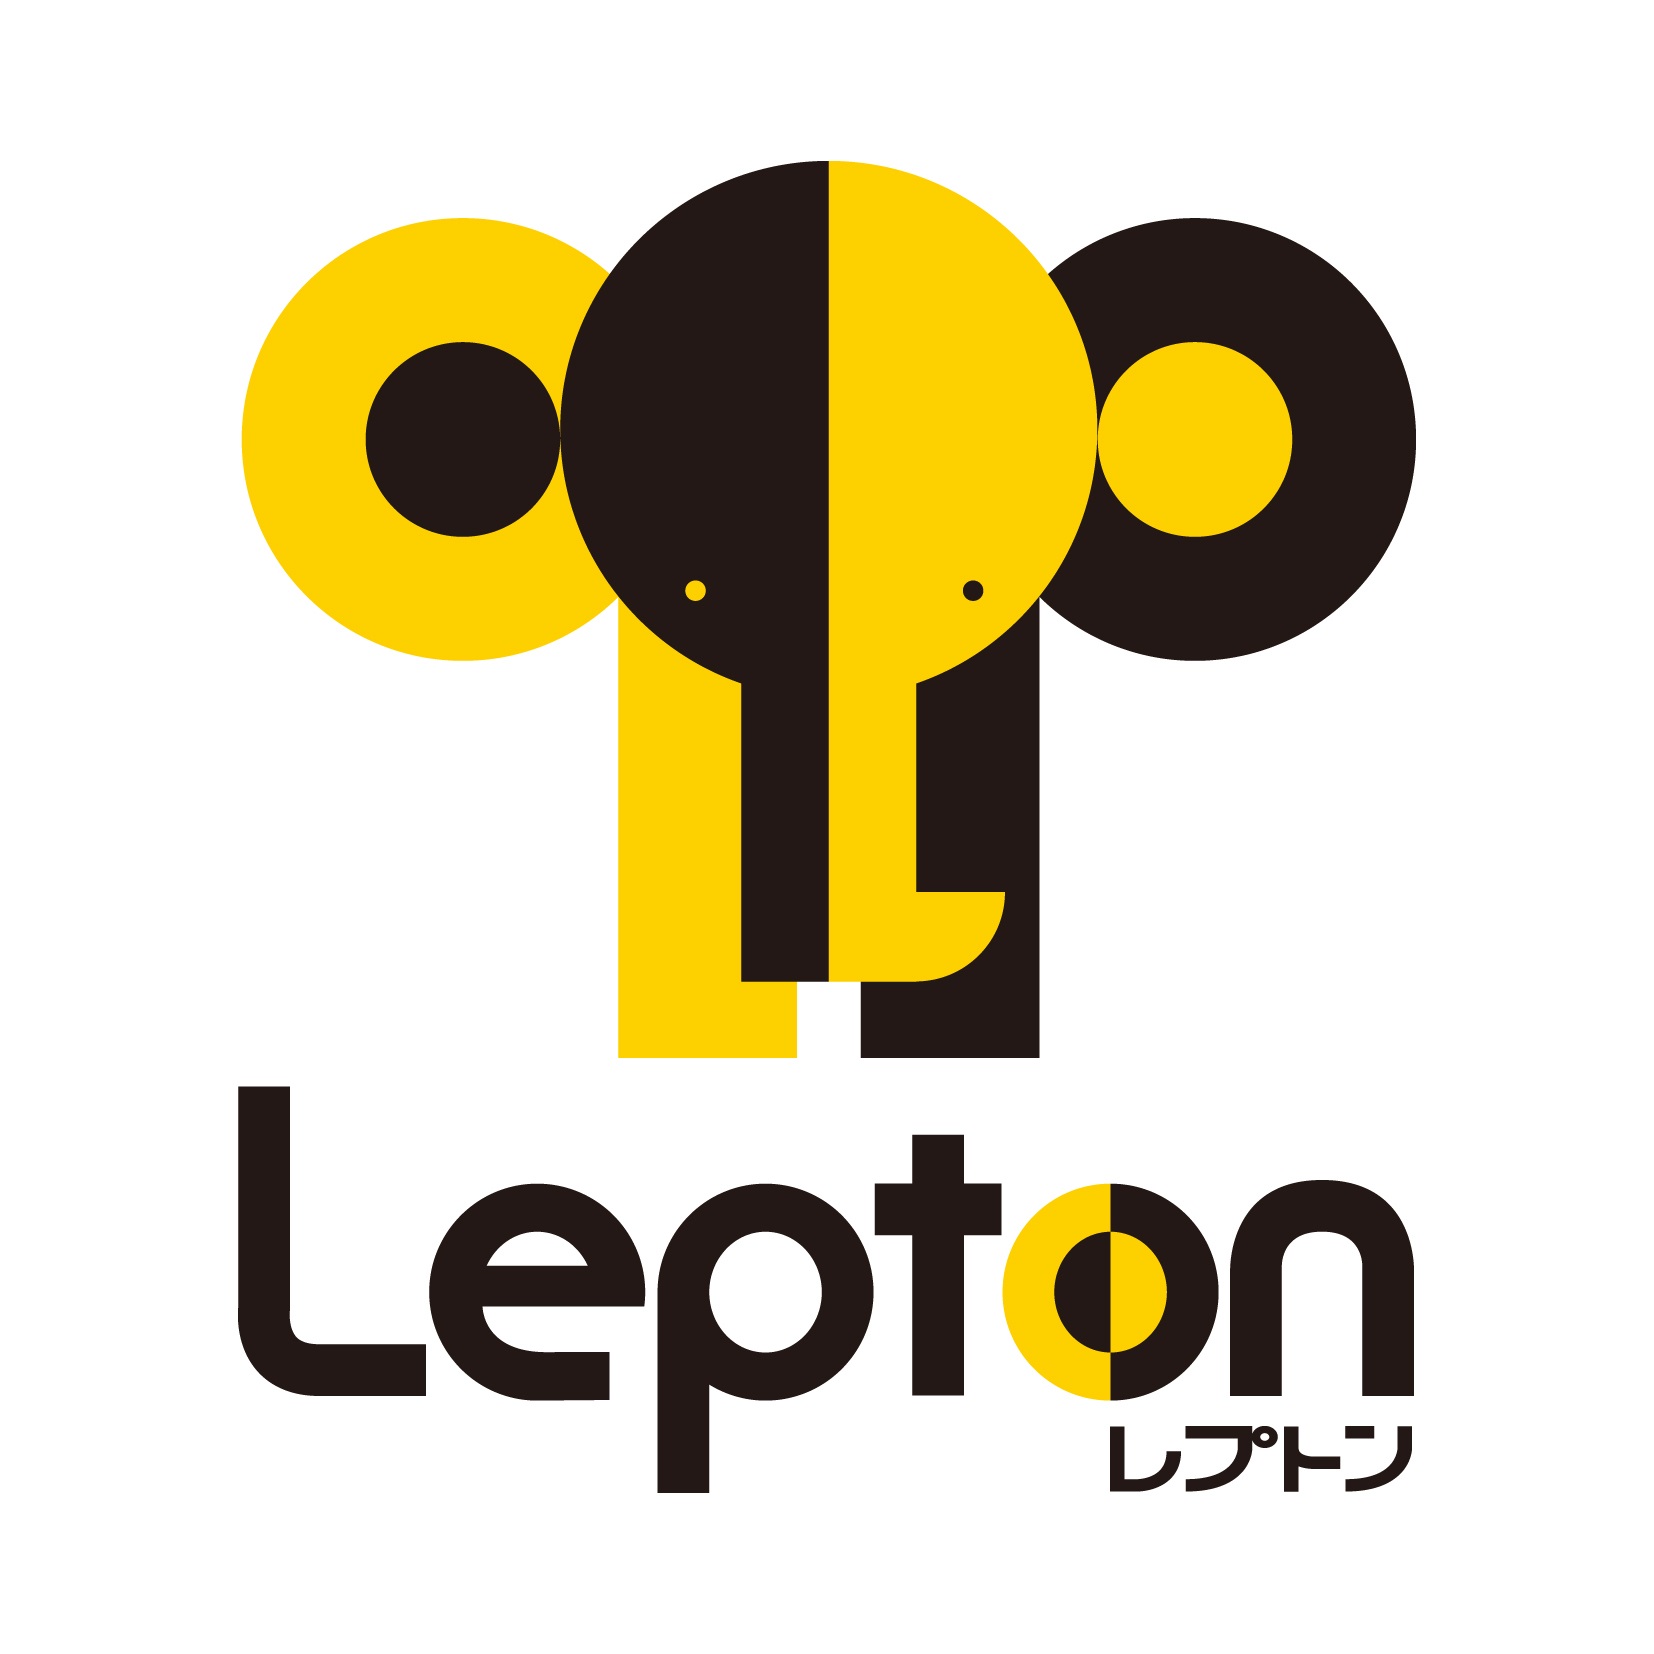 Good Lepton大府南教室